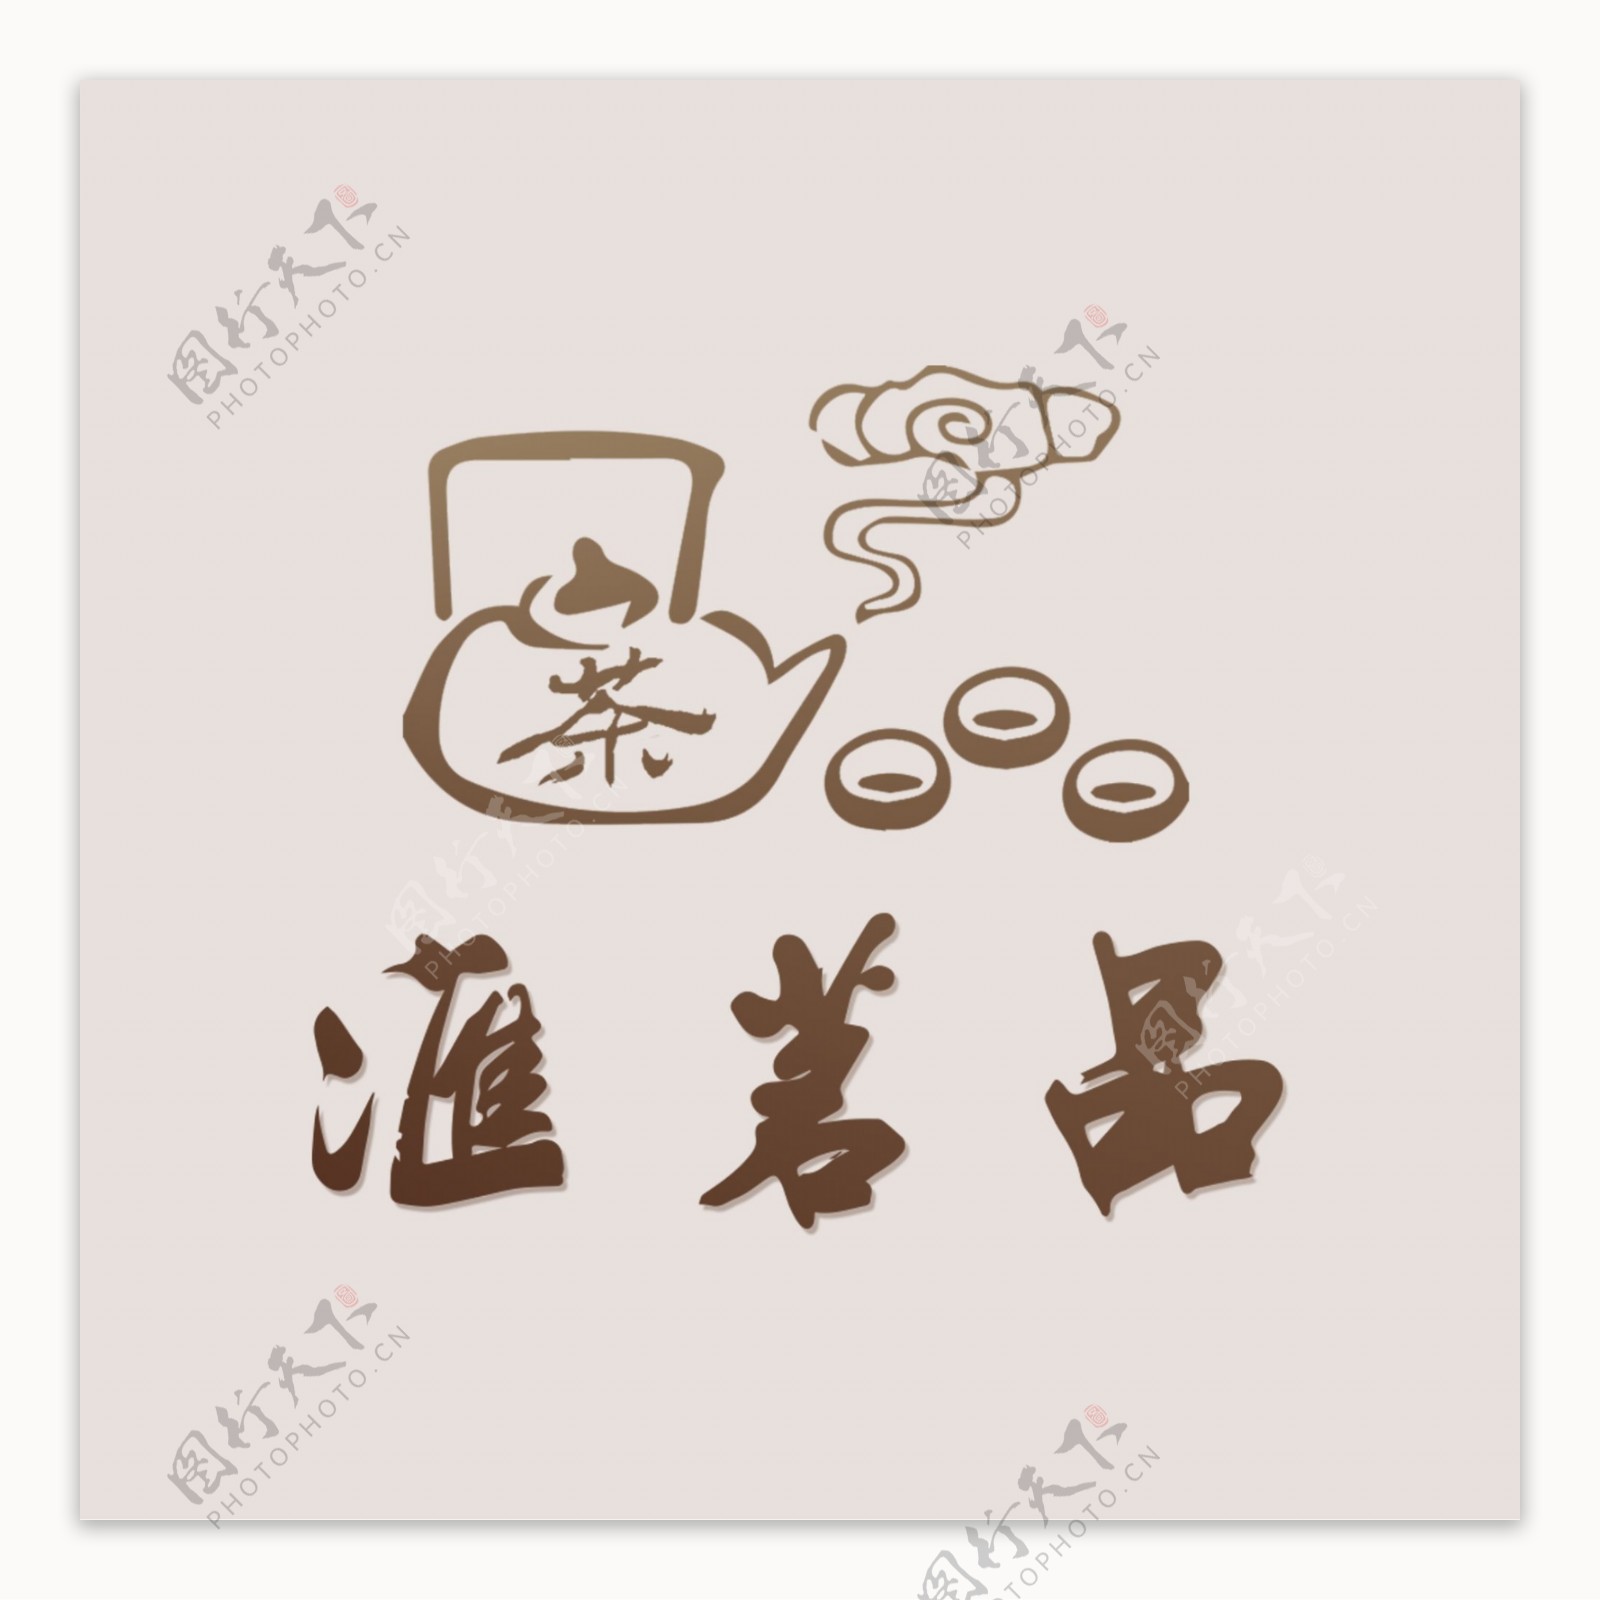 茶企logo